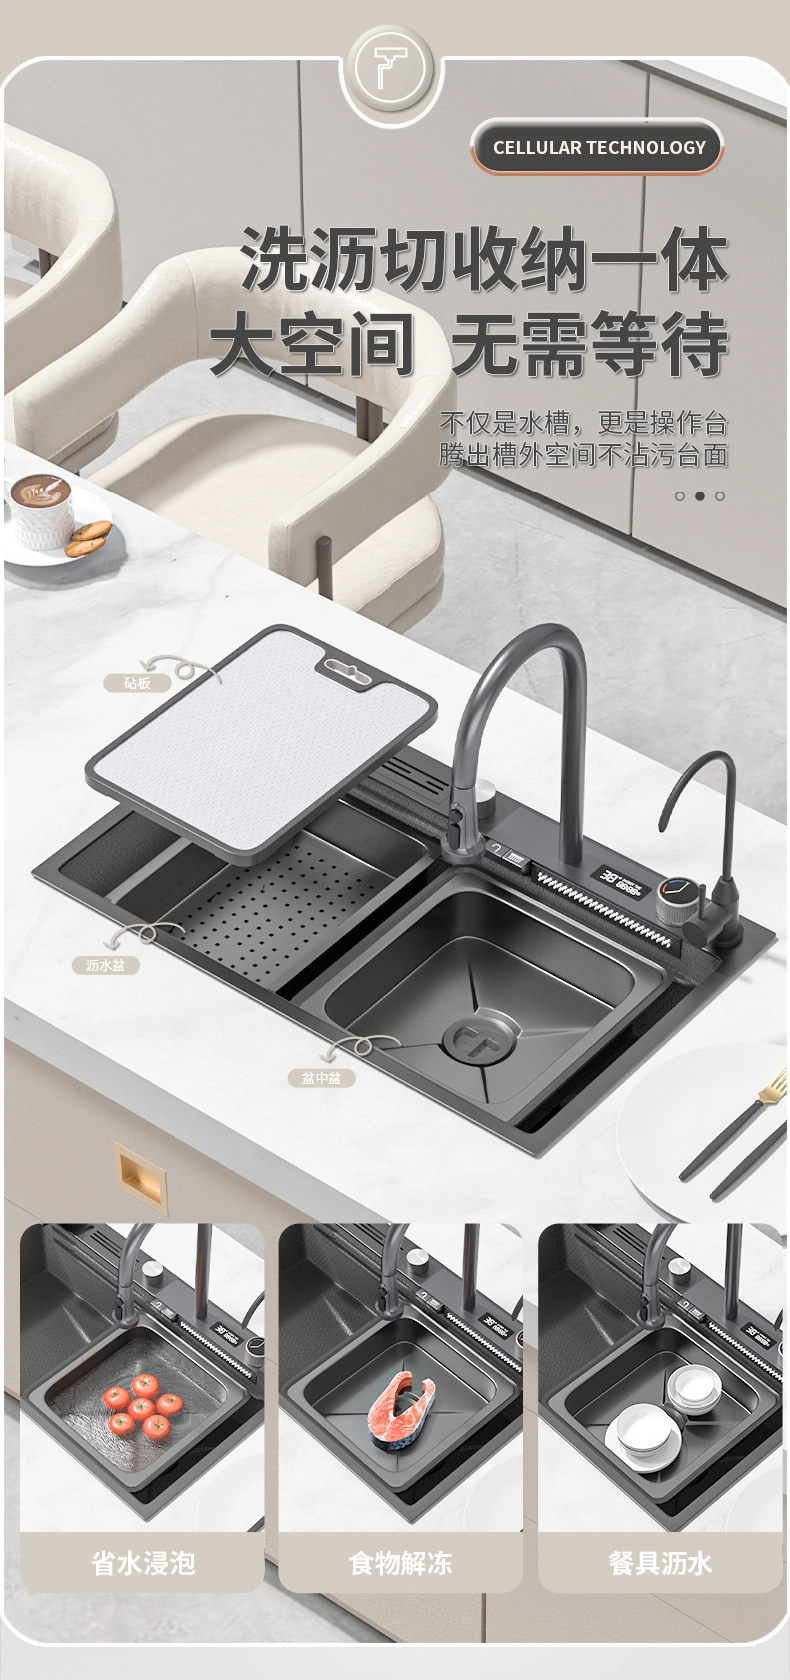 SUS 304 Stainless Steel Black Kitchen Sink Kitchen Faucet Customizable Modern Multifunctional Waterfall Smart Digital Display Bowl Sink Price